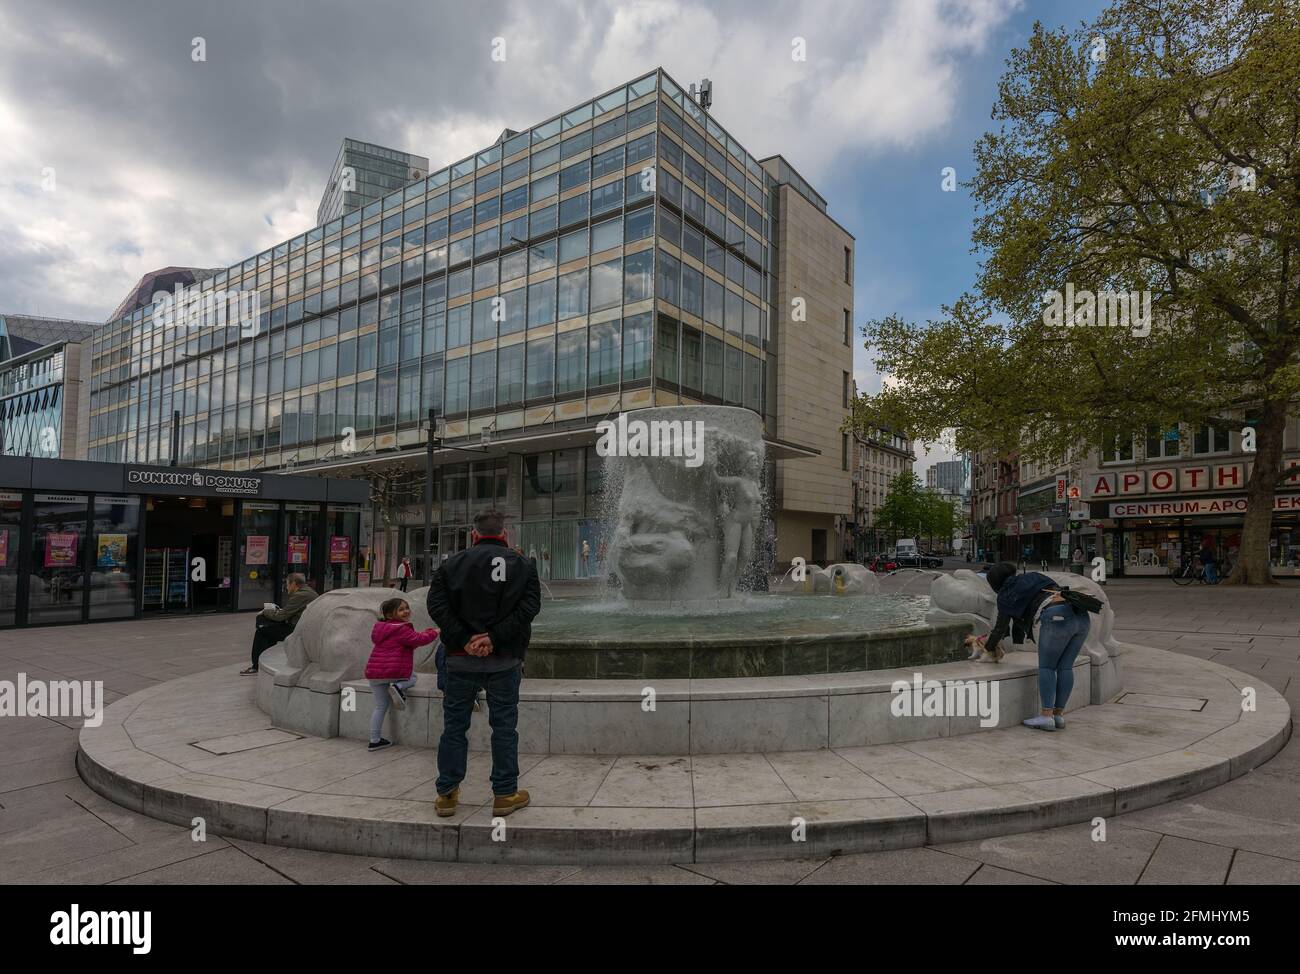 La fontana Brockhaus nella via dello shopping Zeil, Francoforte sul meno, Germania Foto Stock